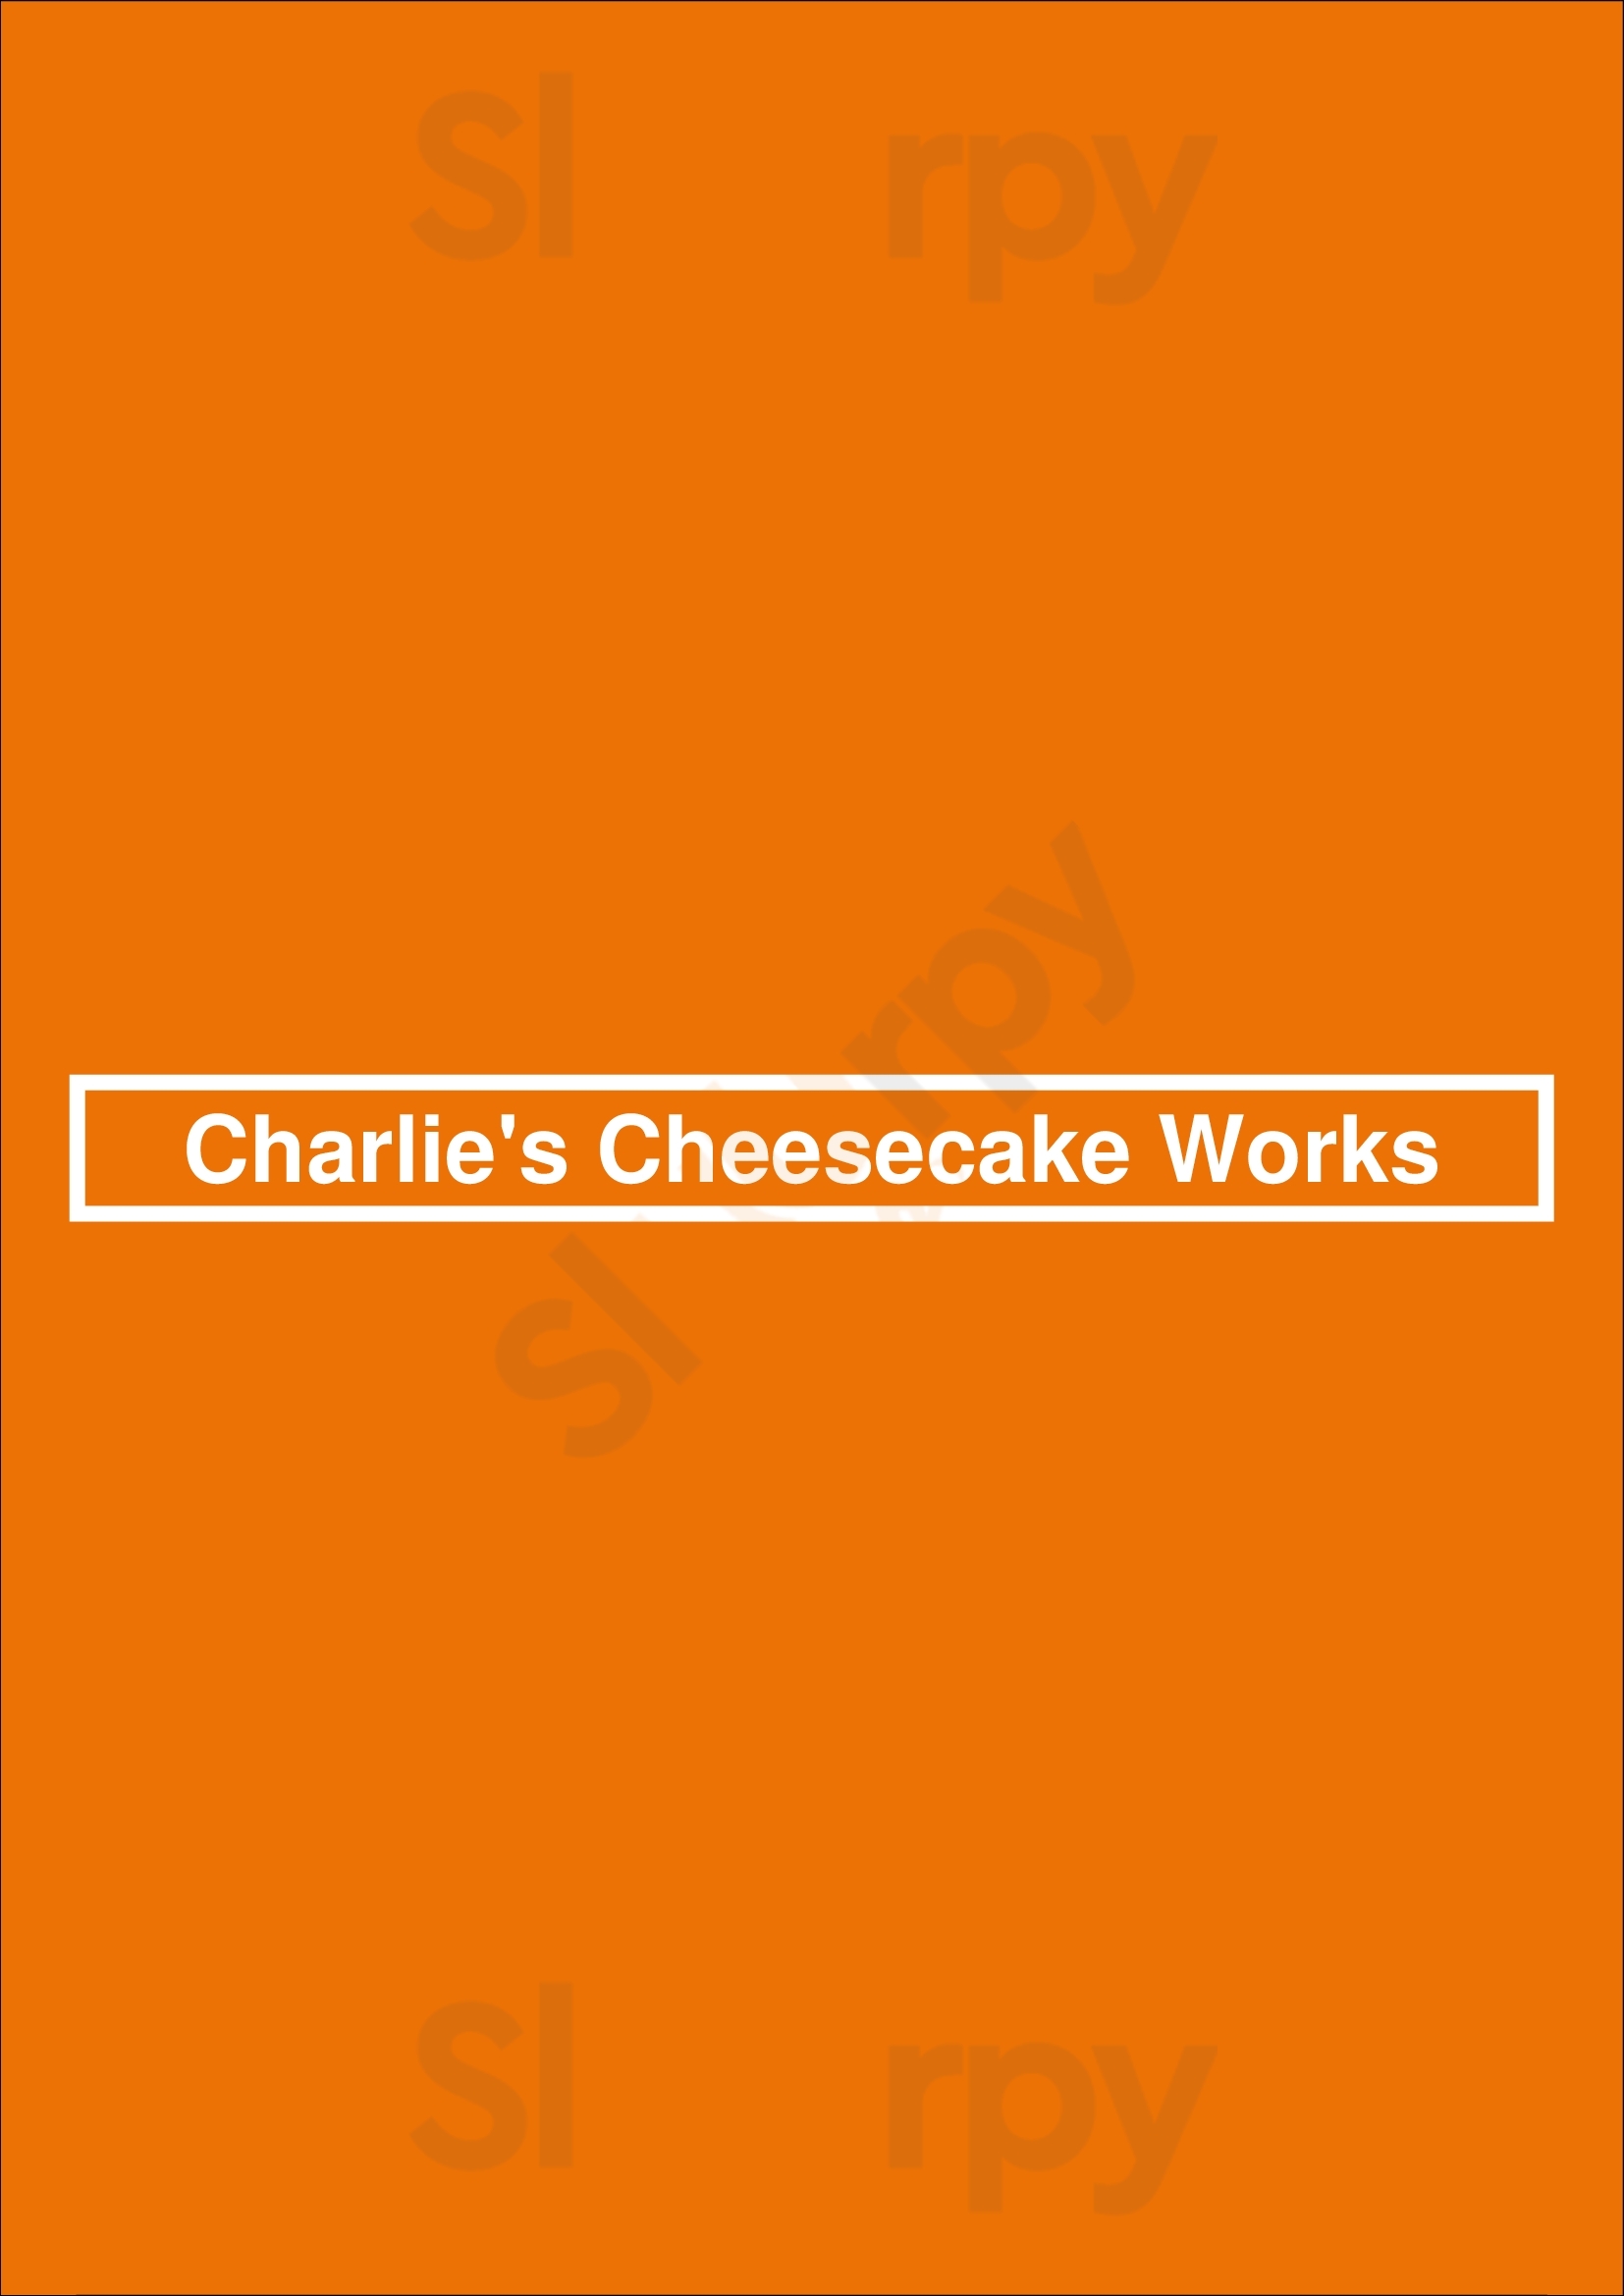 Charlie's Cheesecake Works San Jose Menu - 1